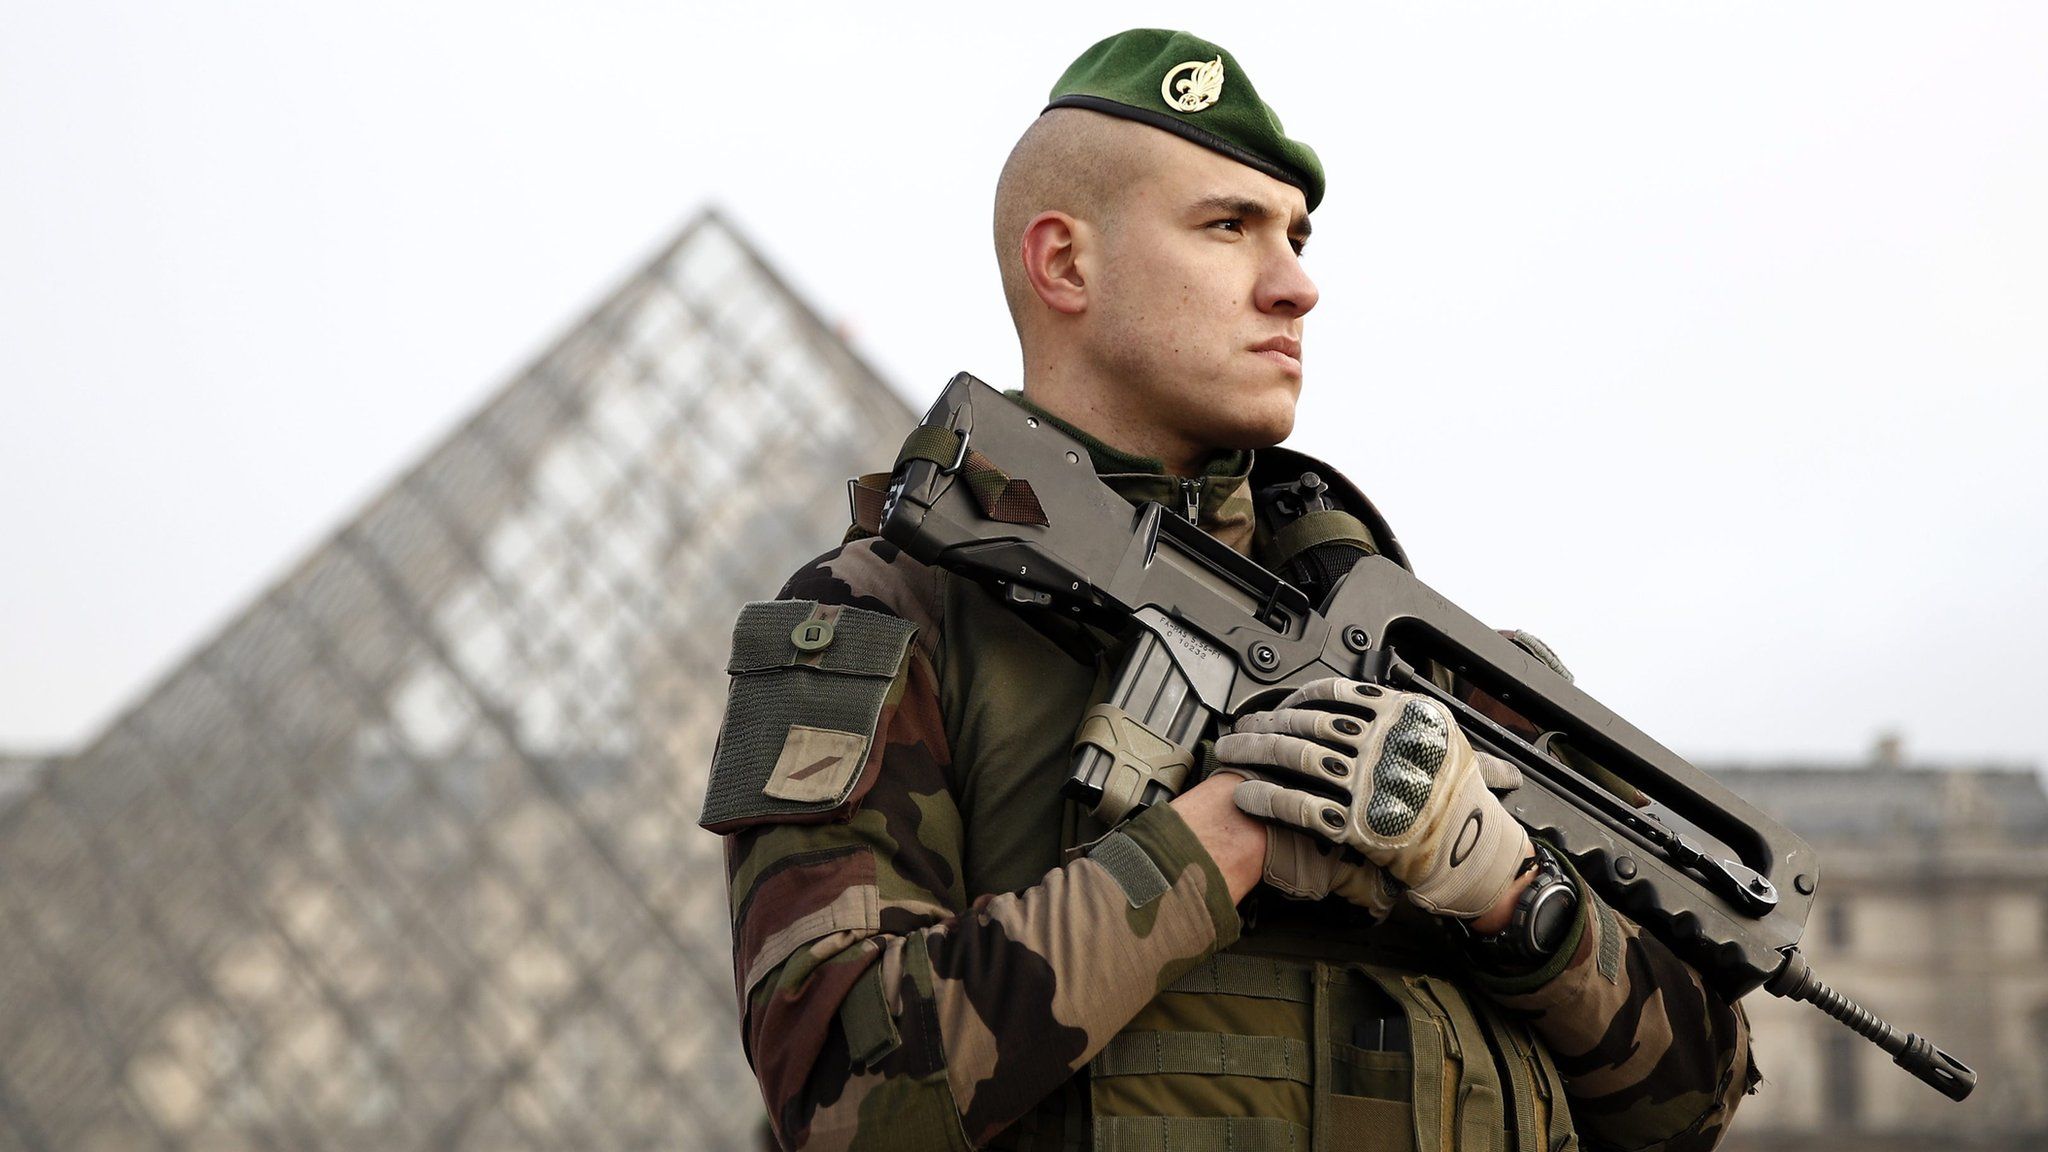 A soldier guarding The Louvre in Paris